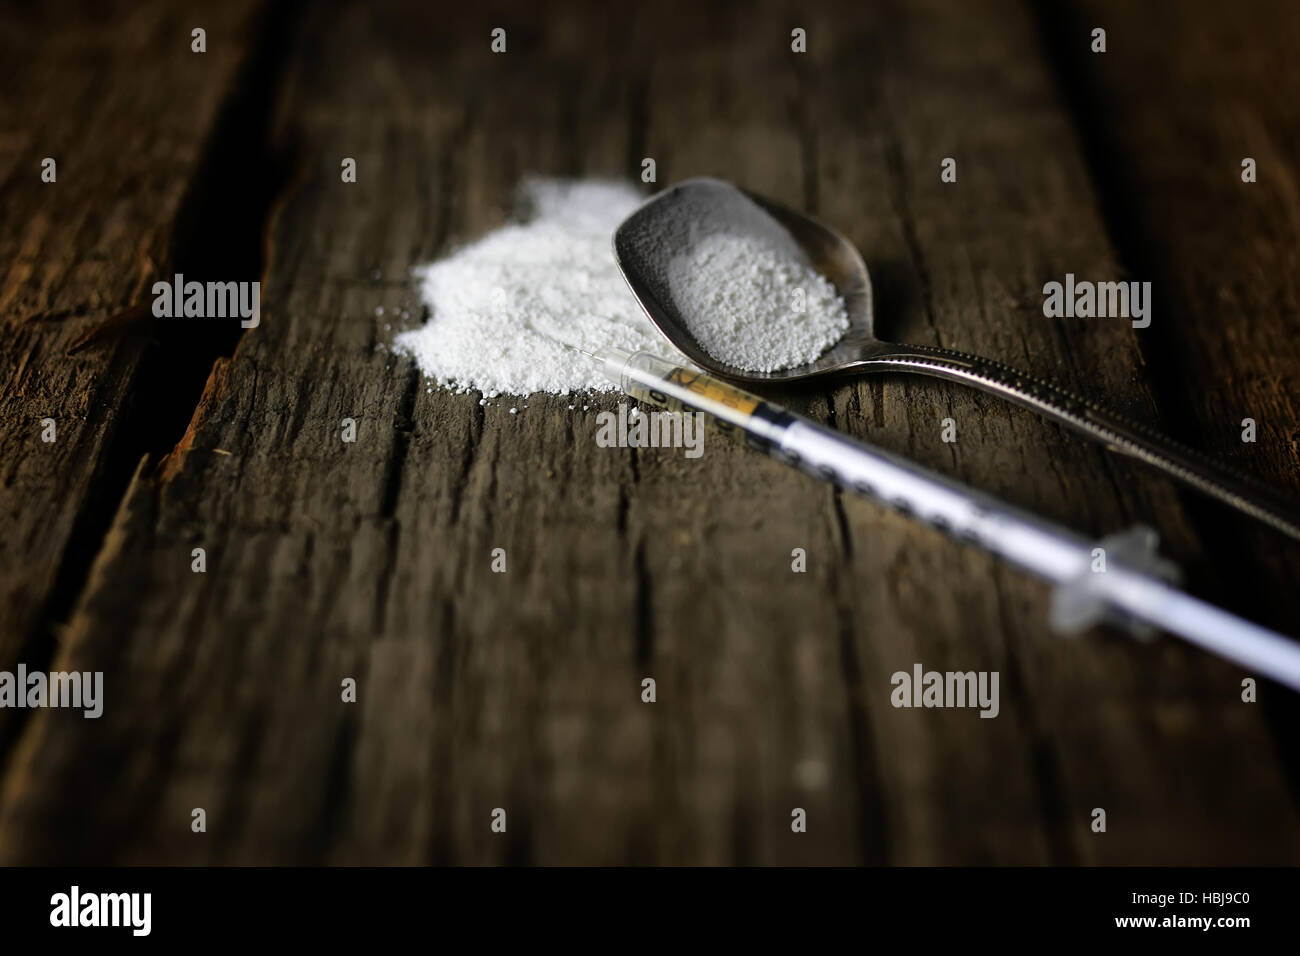 https://c8.alamy.com/comp/HBJ9C0/cocain-drug-syringe-spoon-HBJ9C0.jpg